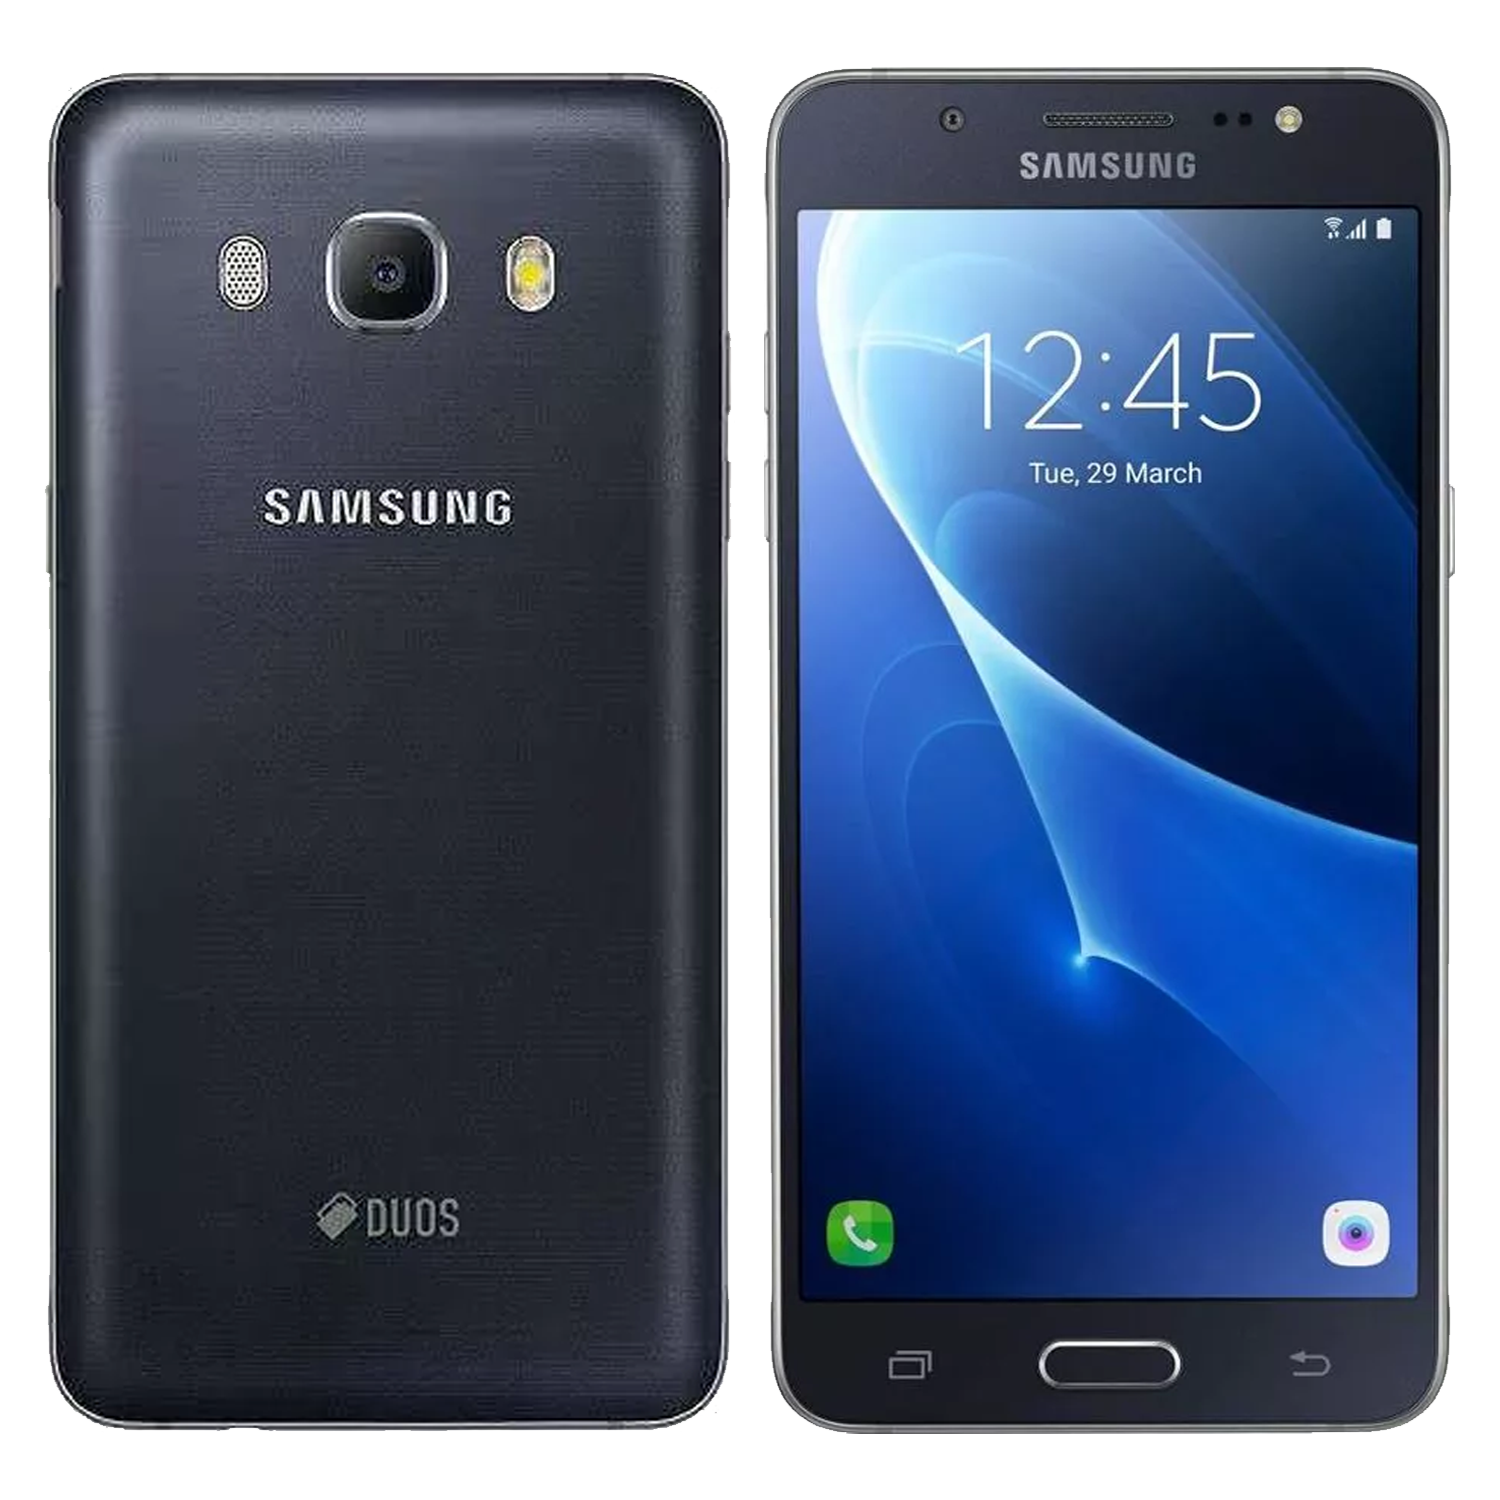 Джи 5 экран. Samsung Galaxy j5 2016. Самсунг галакси j5. Samsung j5 2016 черный. Samsung Galaxy j7 2016.